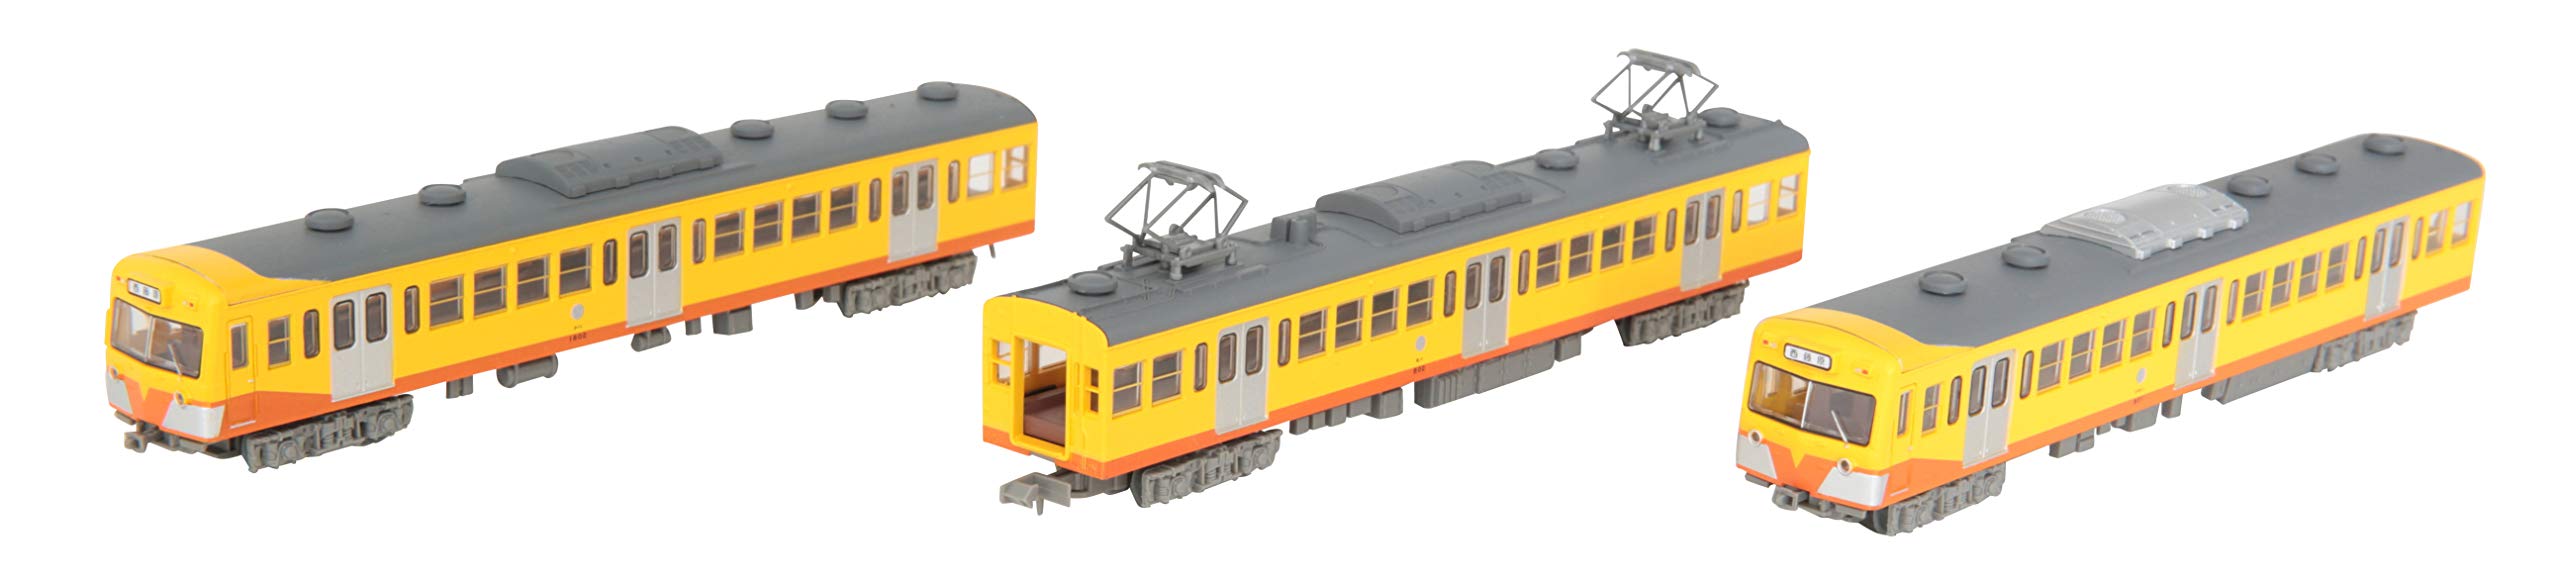 Tomytec 801 Serie 3-Wagen-Set Sangi Railway Collection, limitierte Produktion, Orange Line – 300649